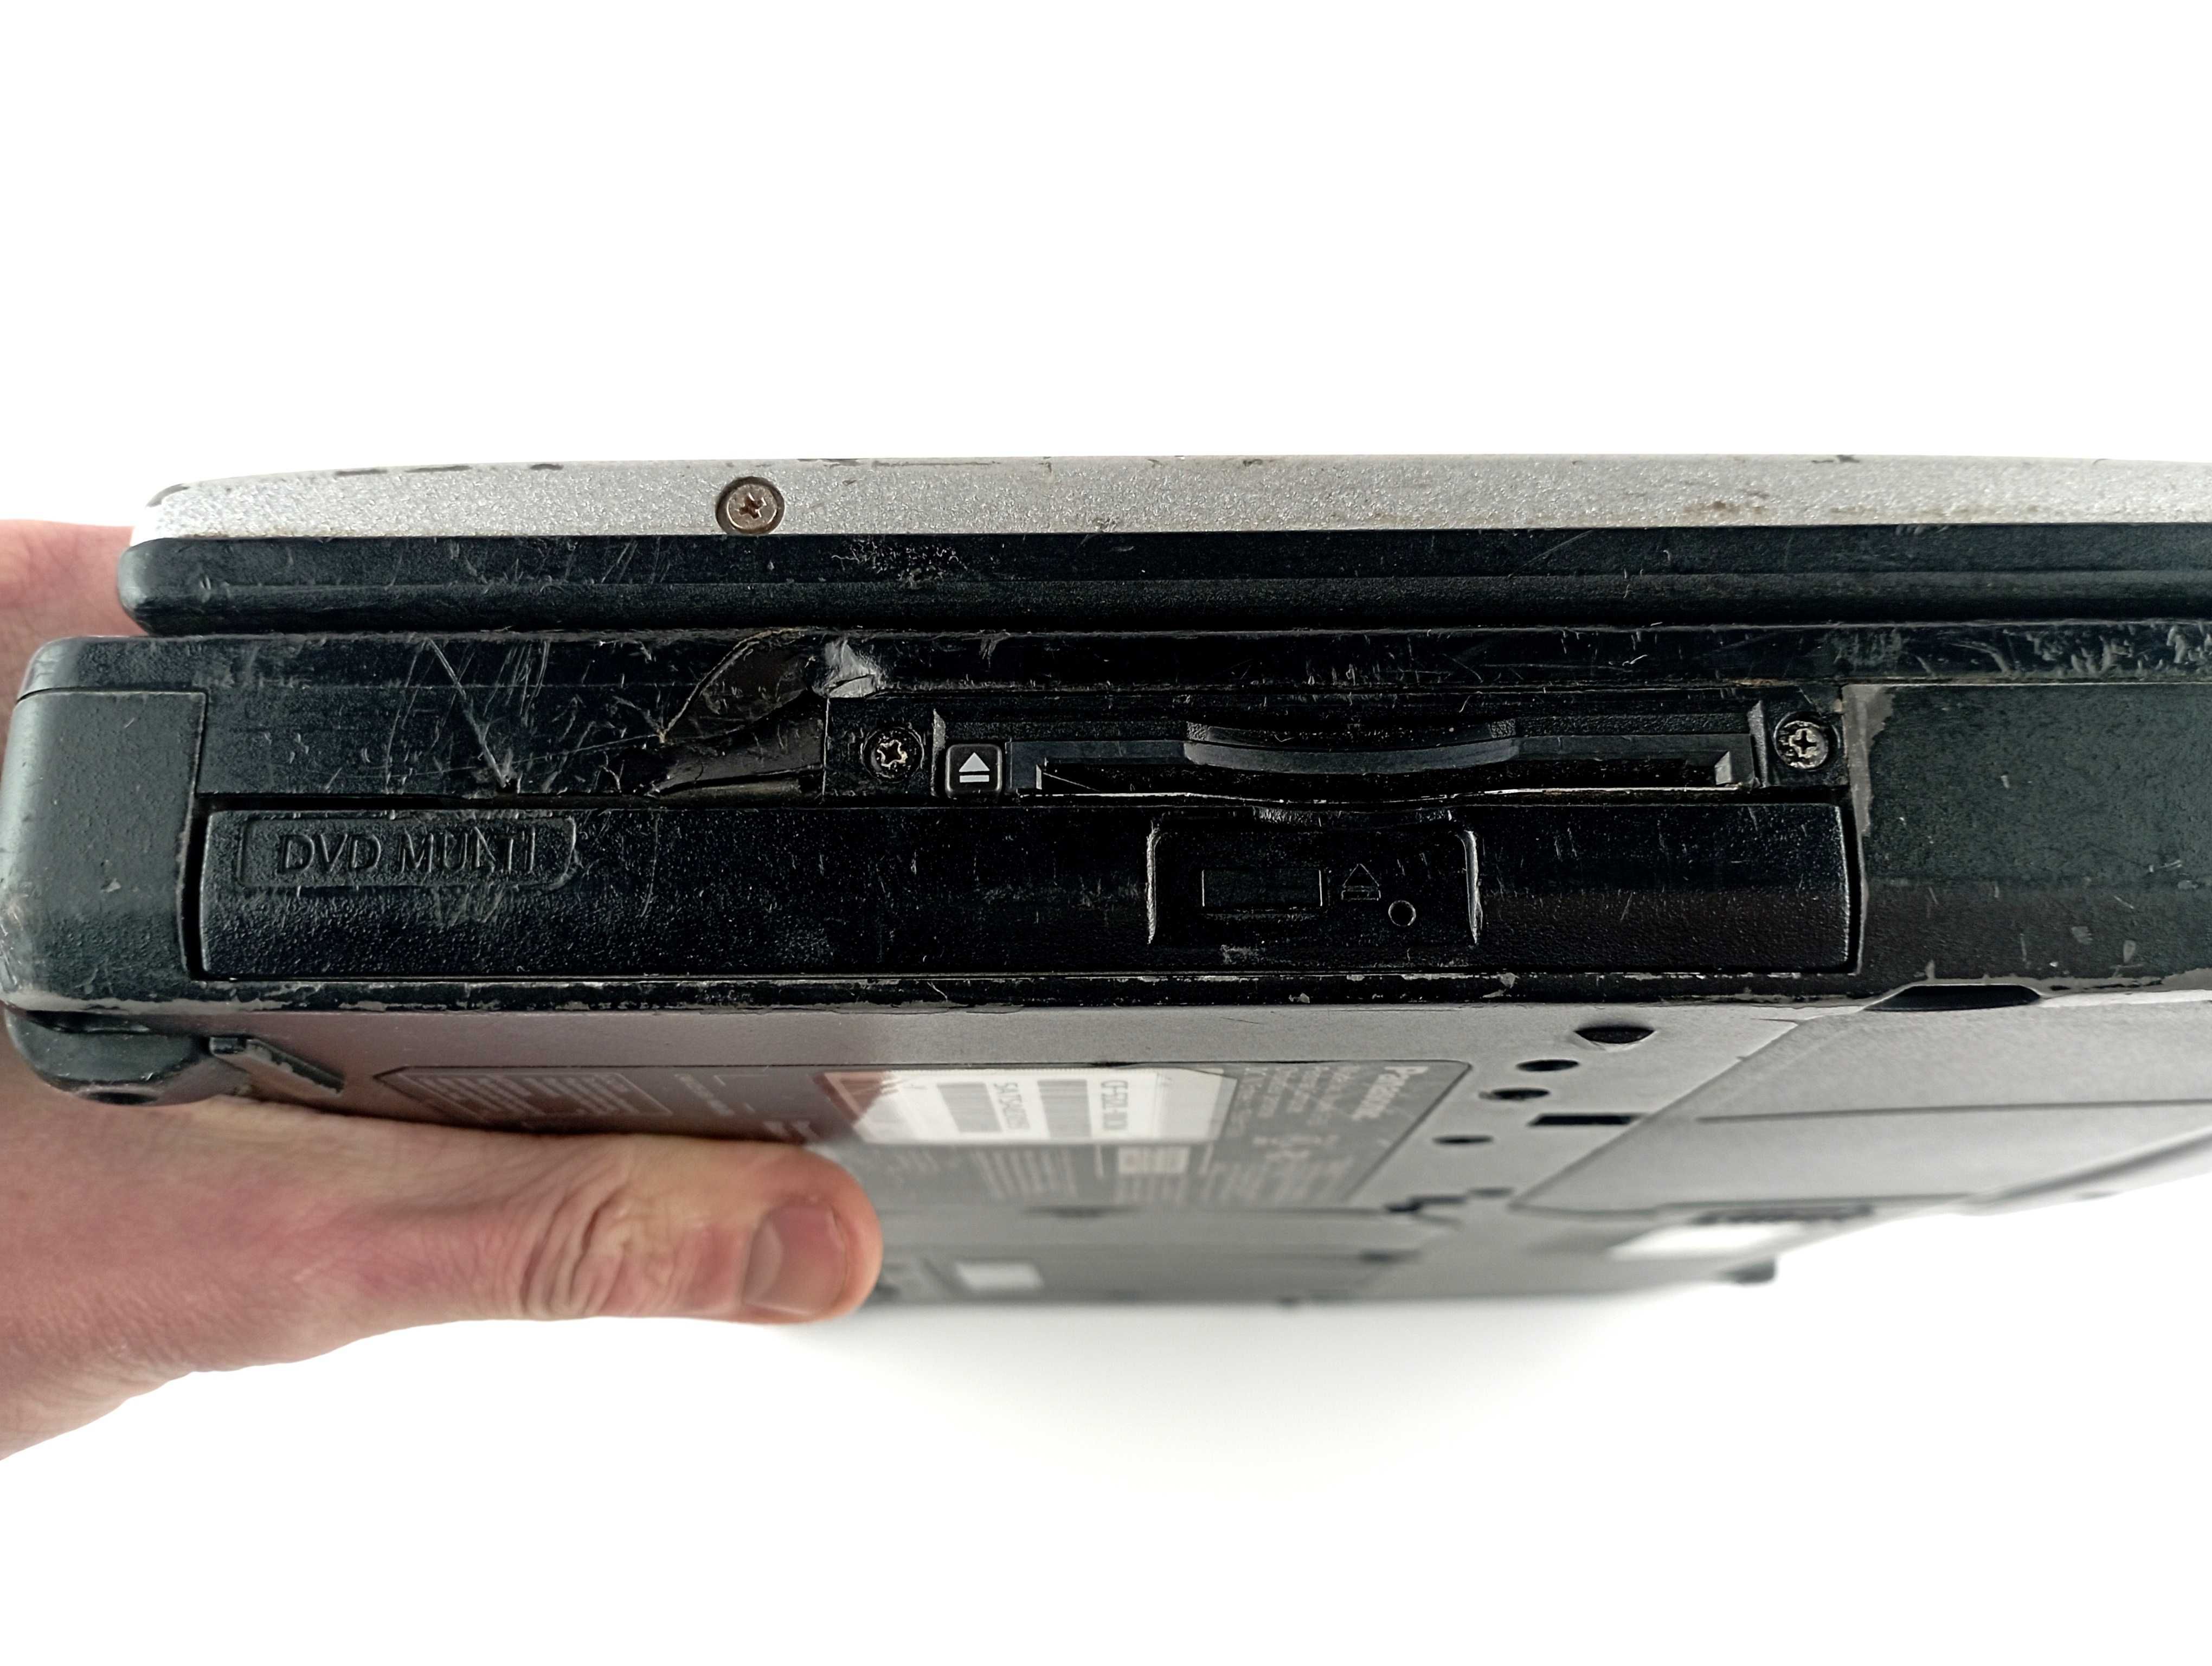 Захищений ноутбук Panasonic ToughBook CF-53 MK4 (i5-4310U) DVD COM